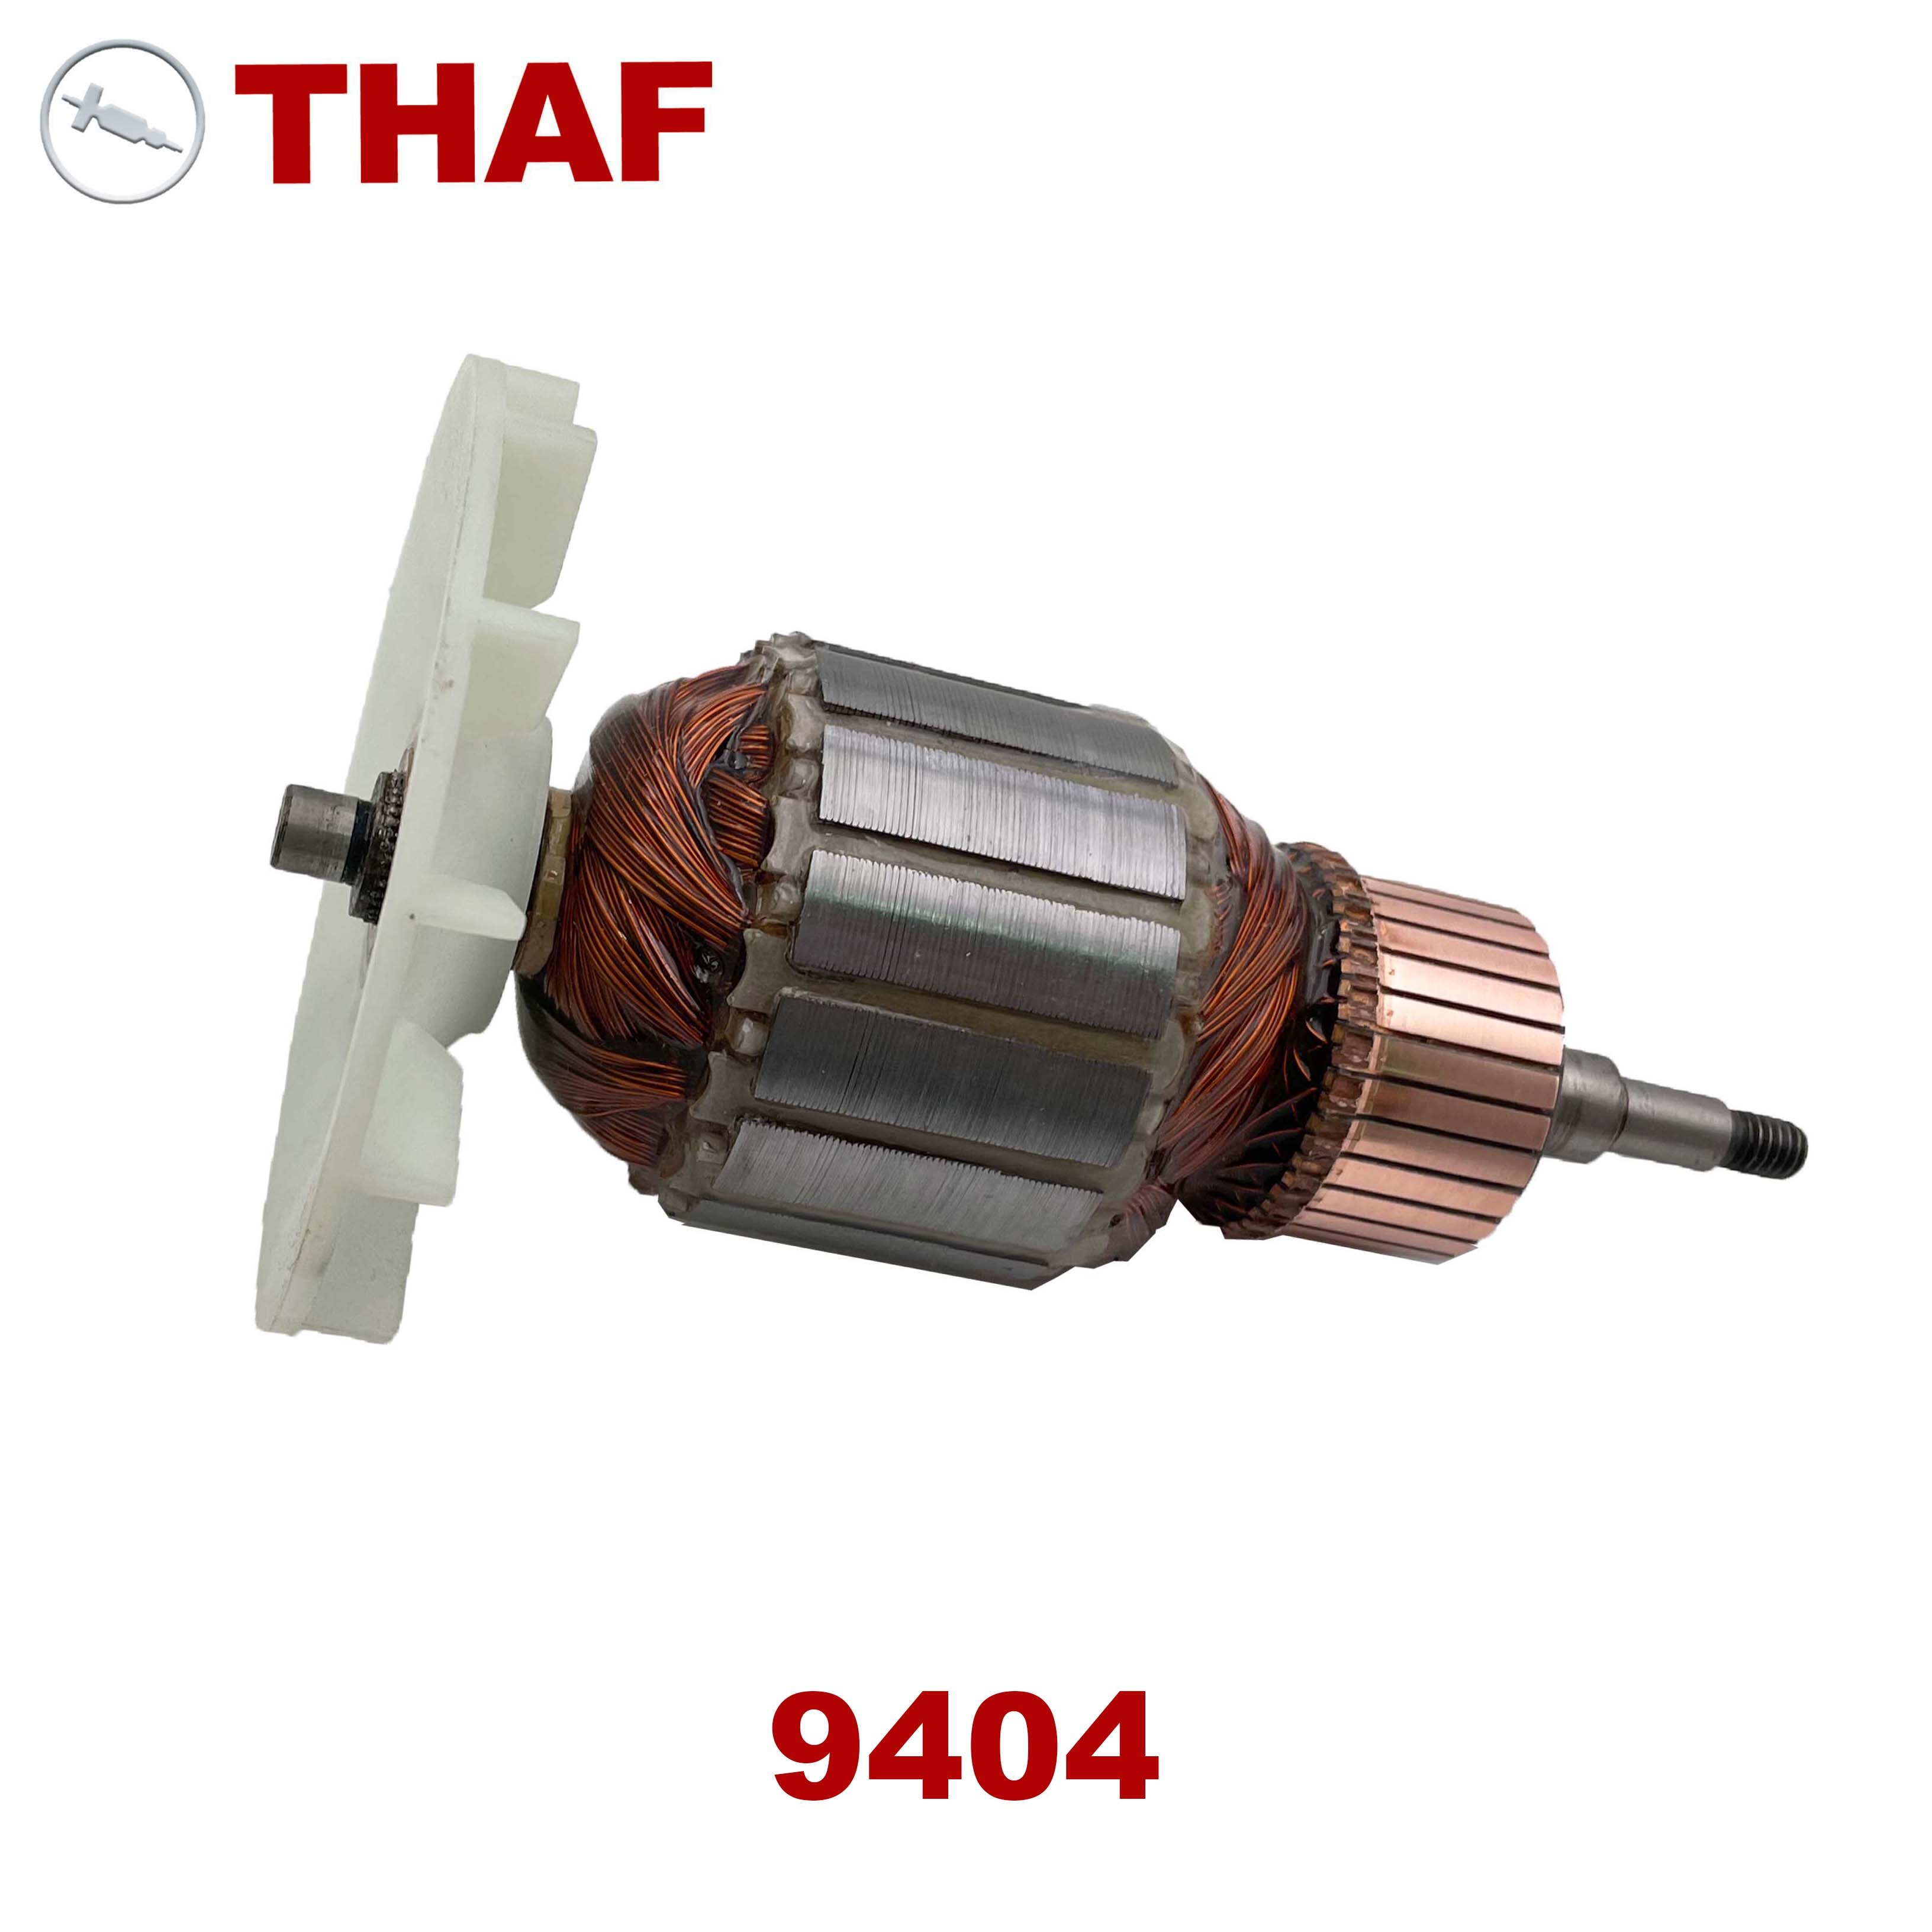 220-240V Rotor Motor Armature Replacement for MAKITA 9404 9920 9903 Belt Sander 